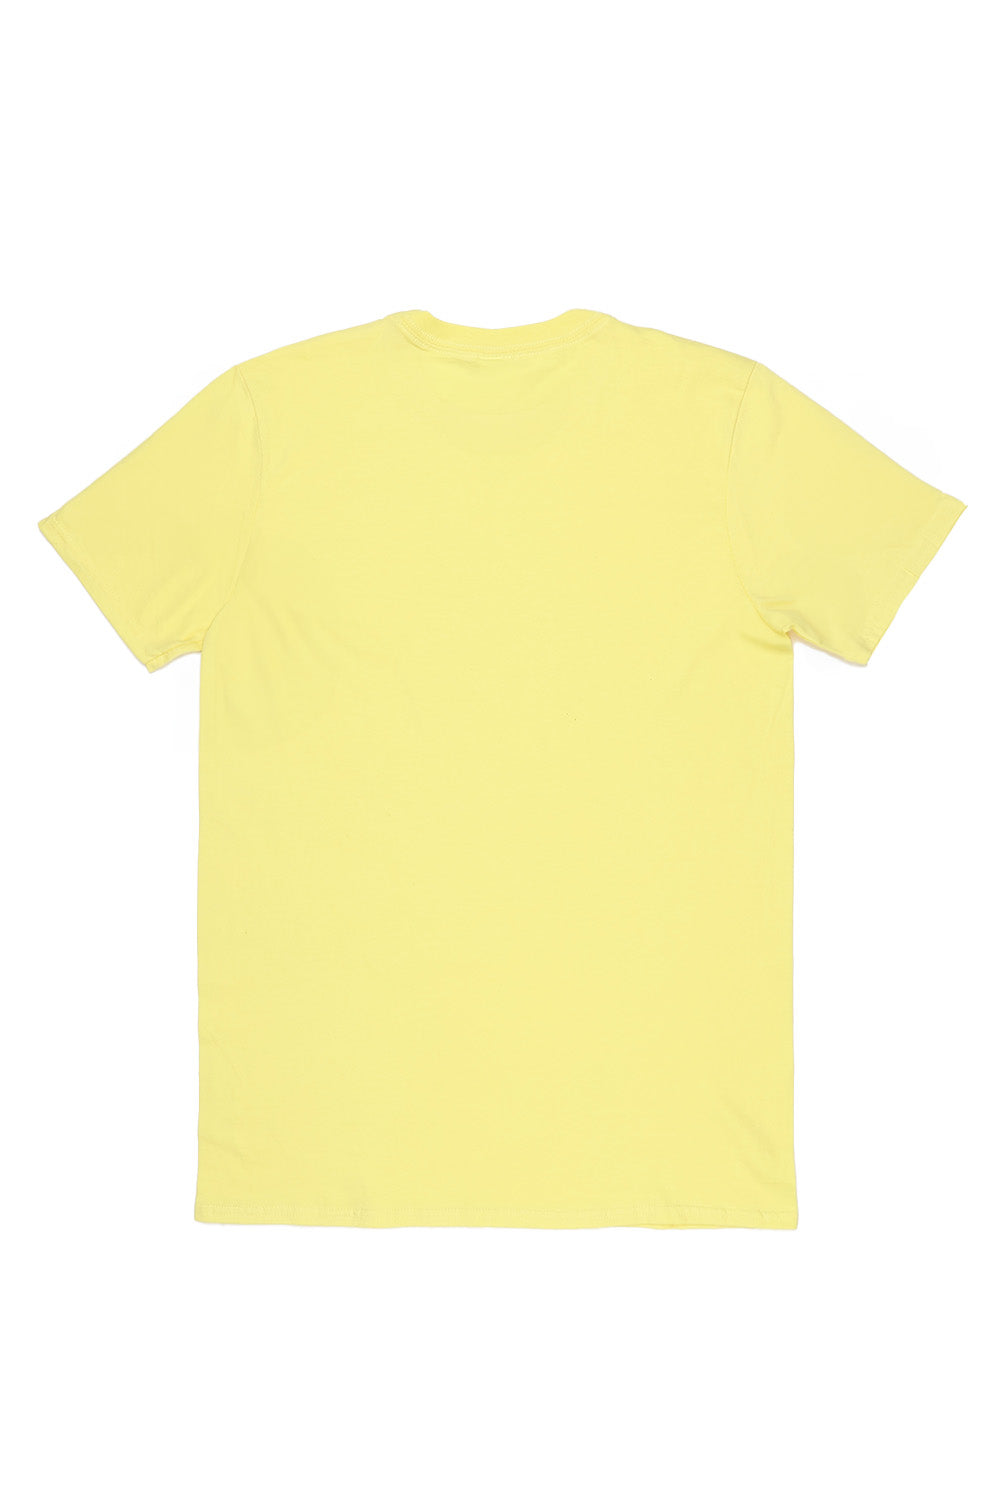 Heart of Bow's T-Shirt in Yellow (Custom Packs)